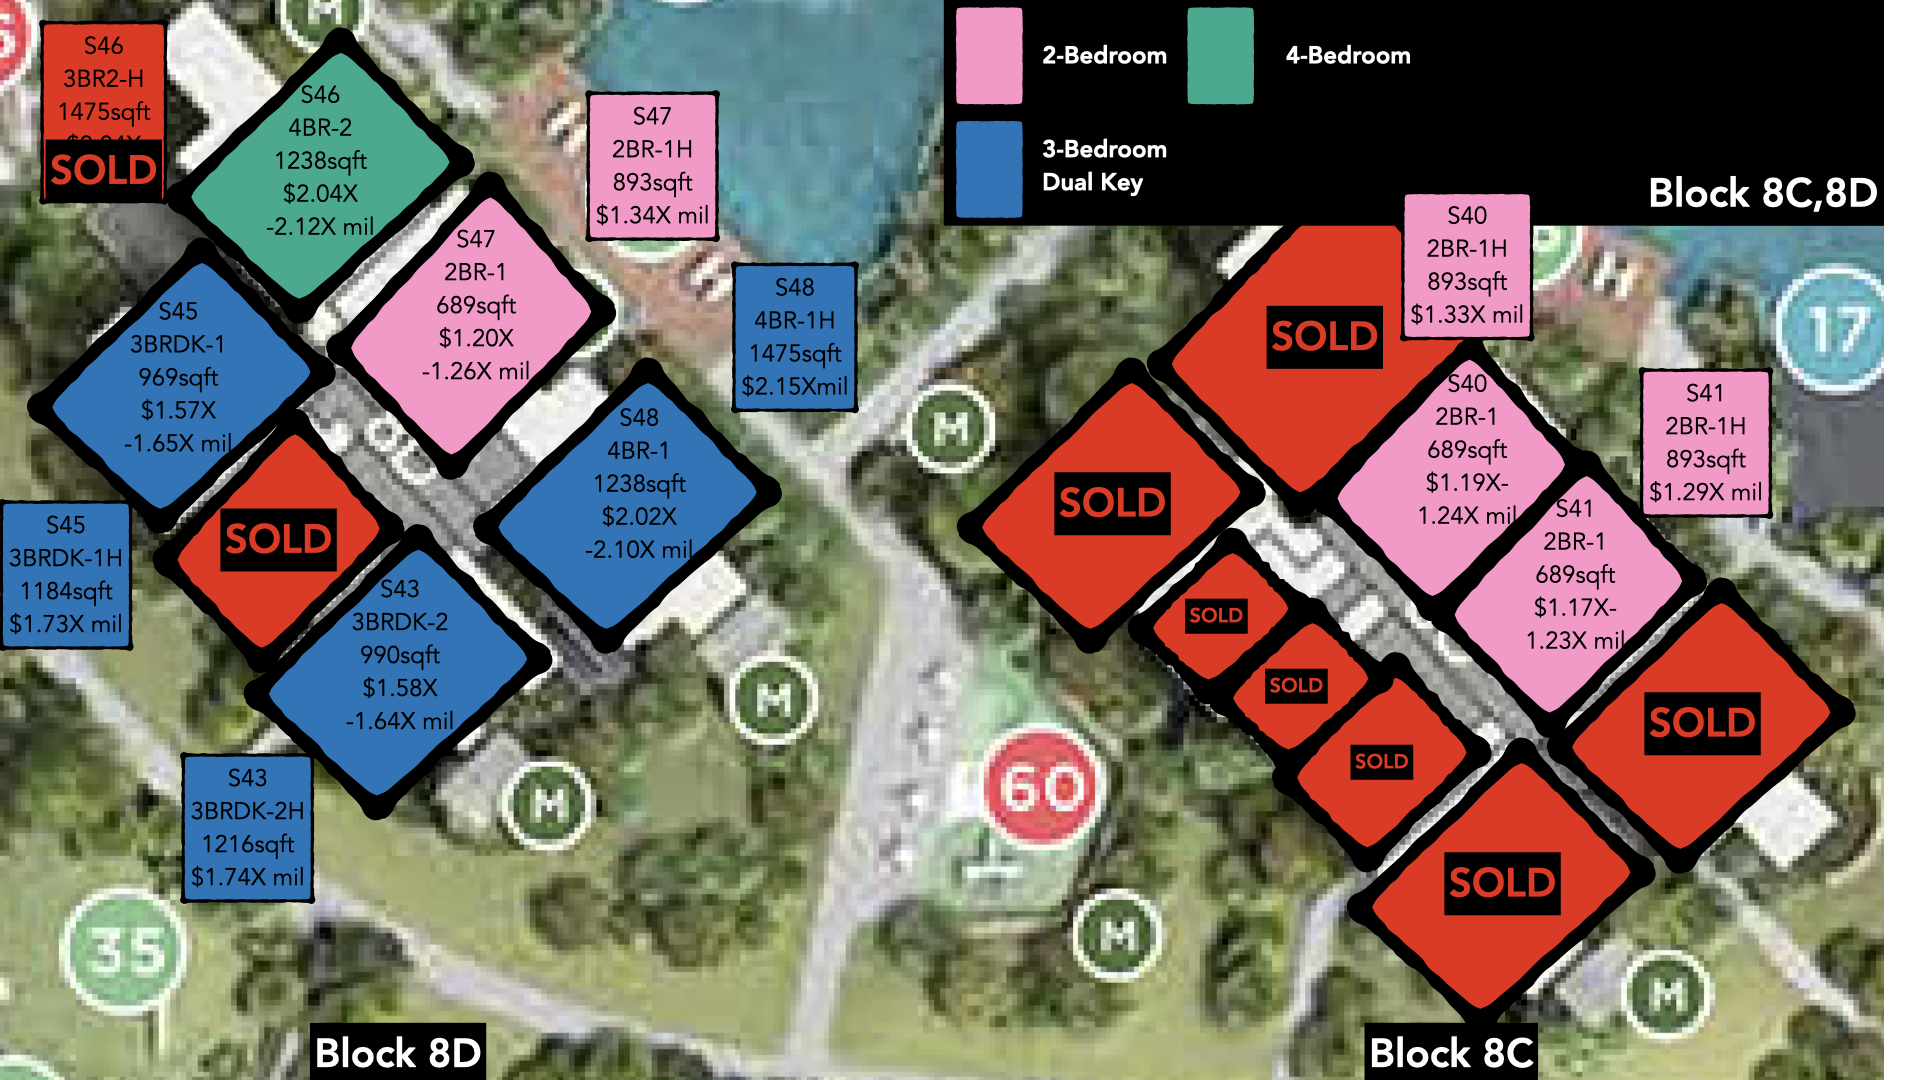 Parc Clematis Price Distribution Site Plan Block 8C,8D PropertyLimBrothers.png